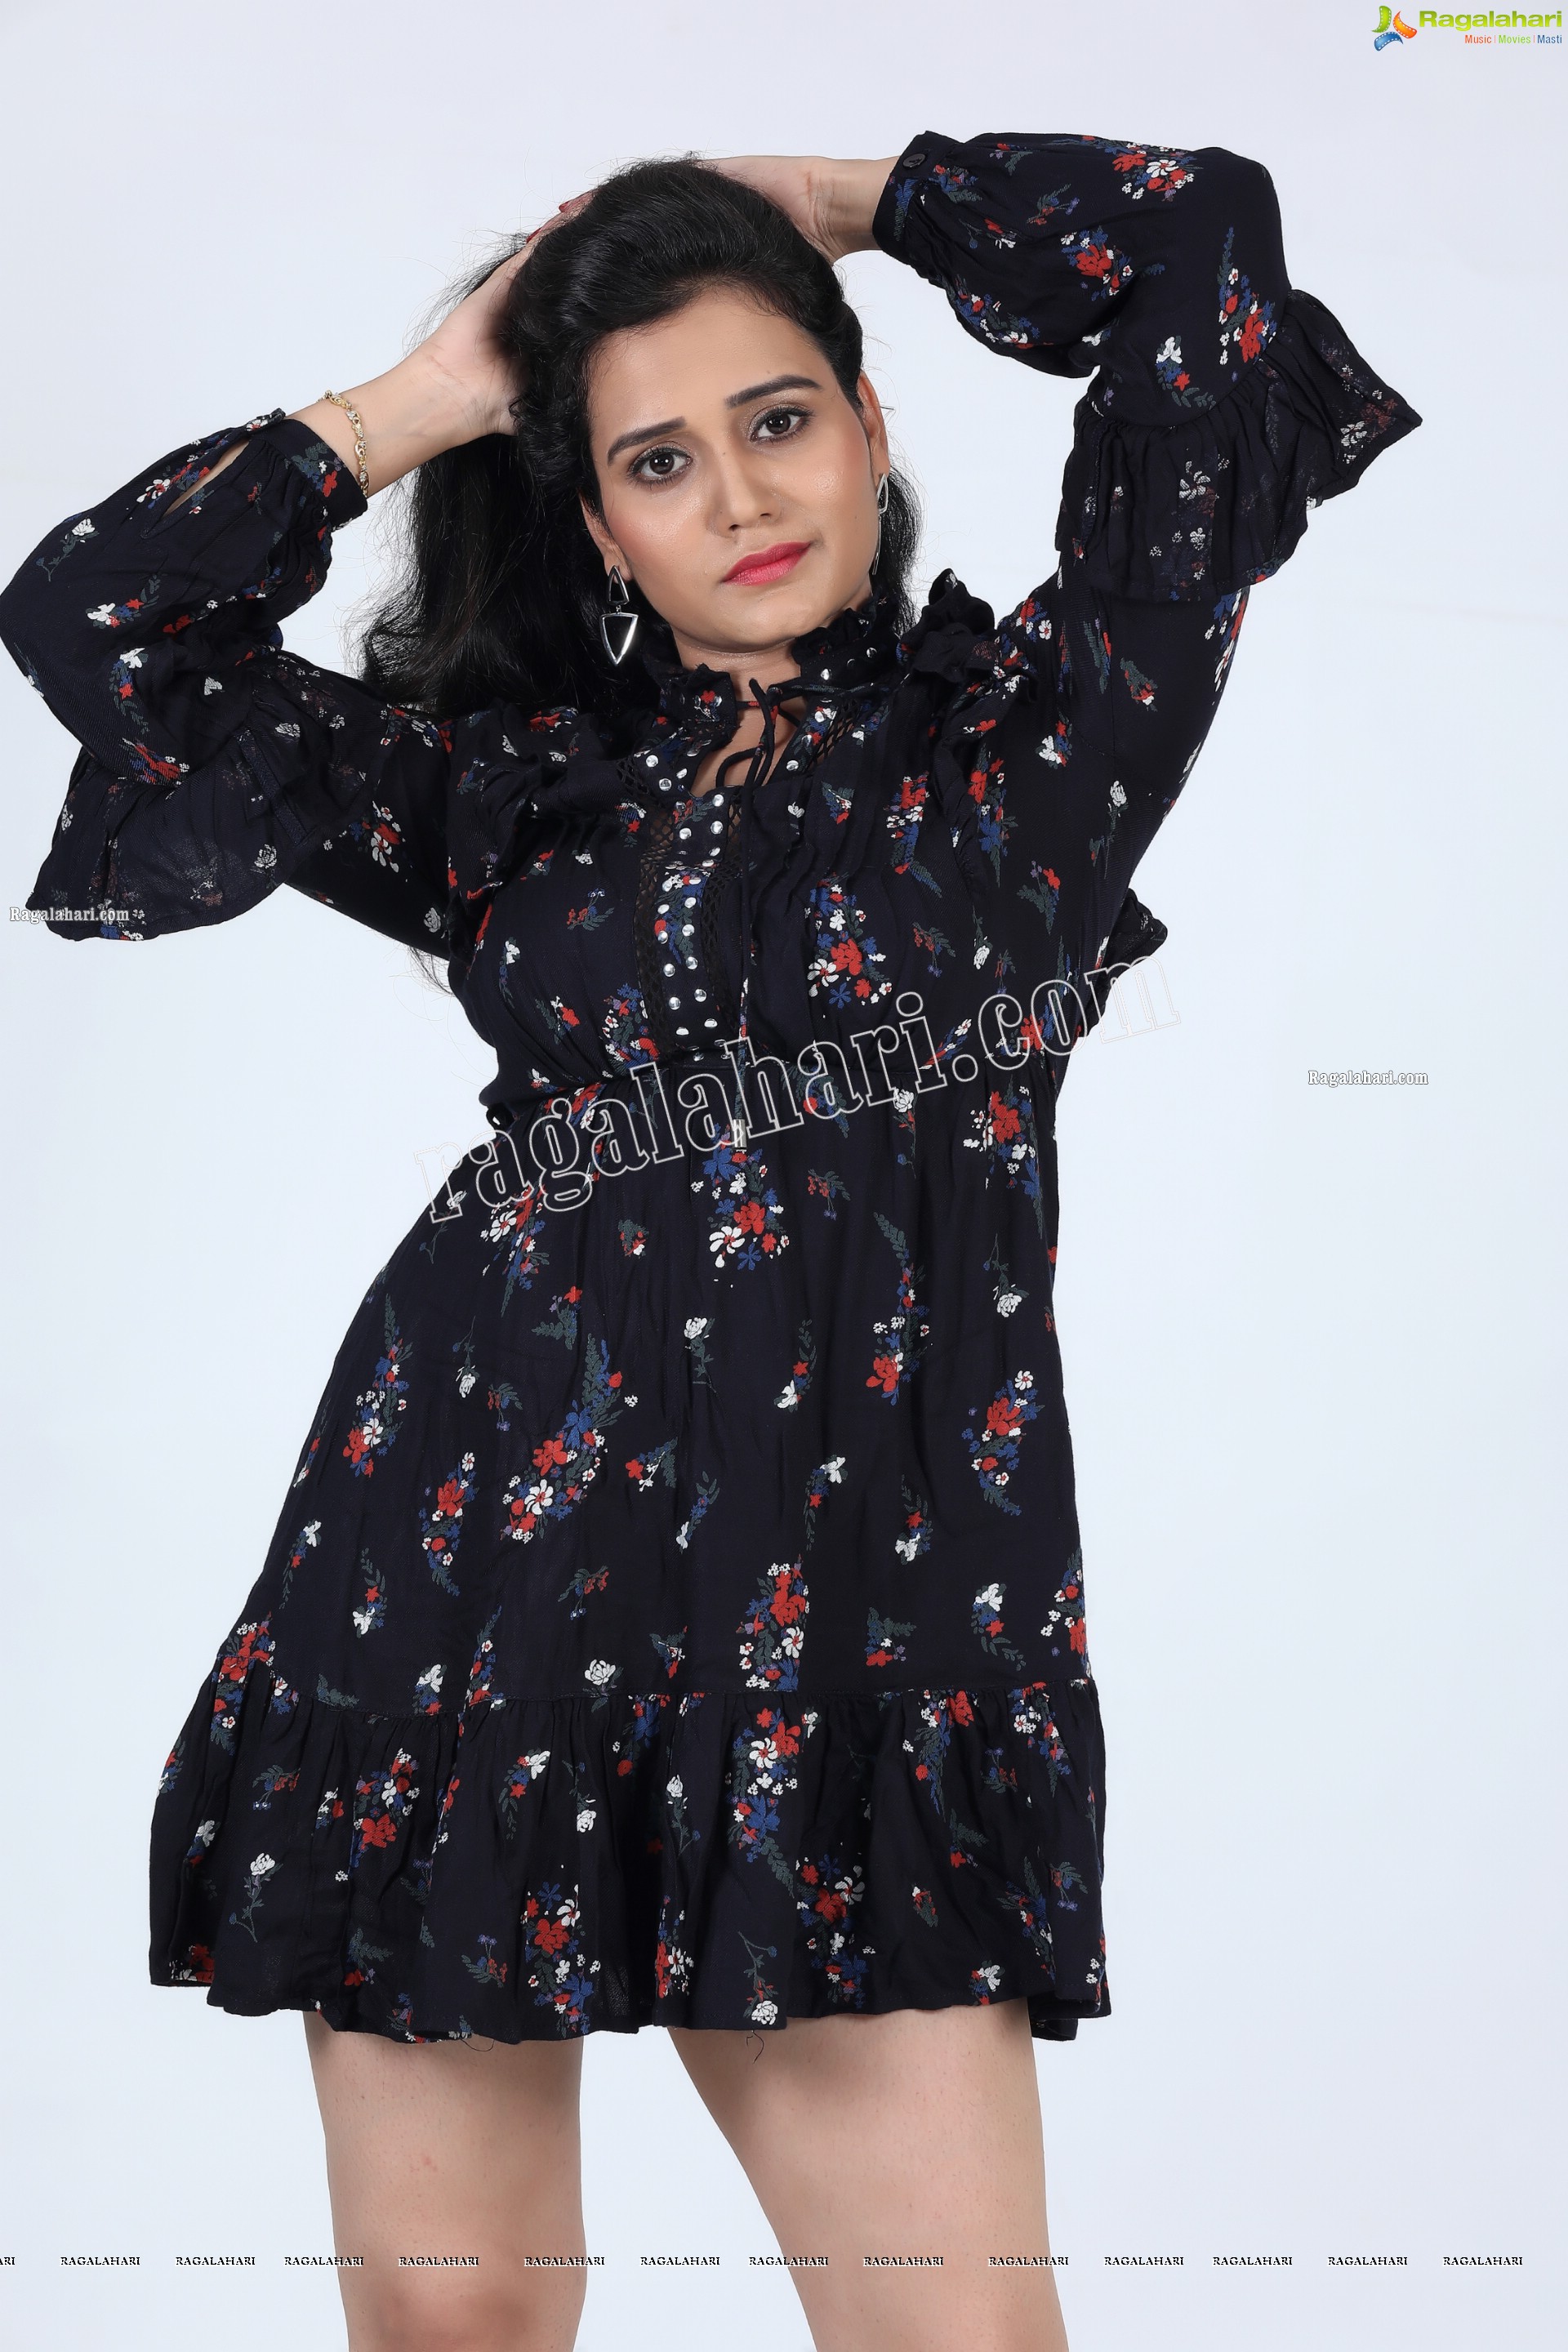 VJ Jaanu in Black Floral Print Mini Dress Exclusive Photo Shoot